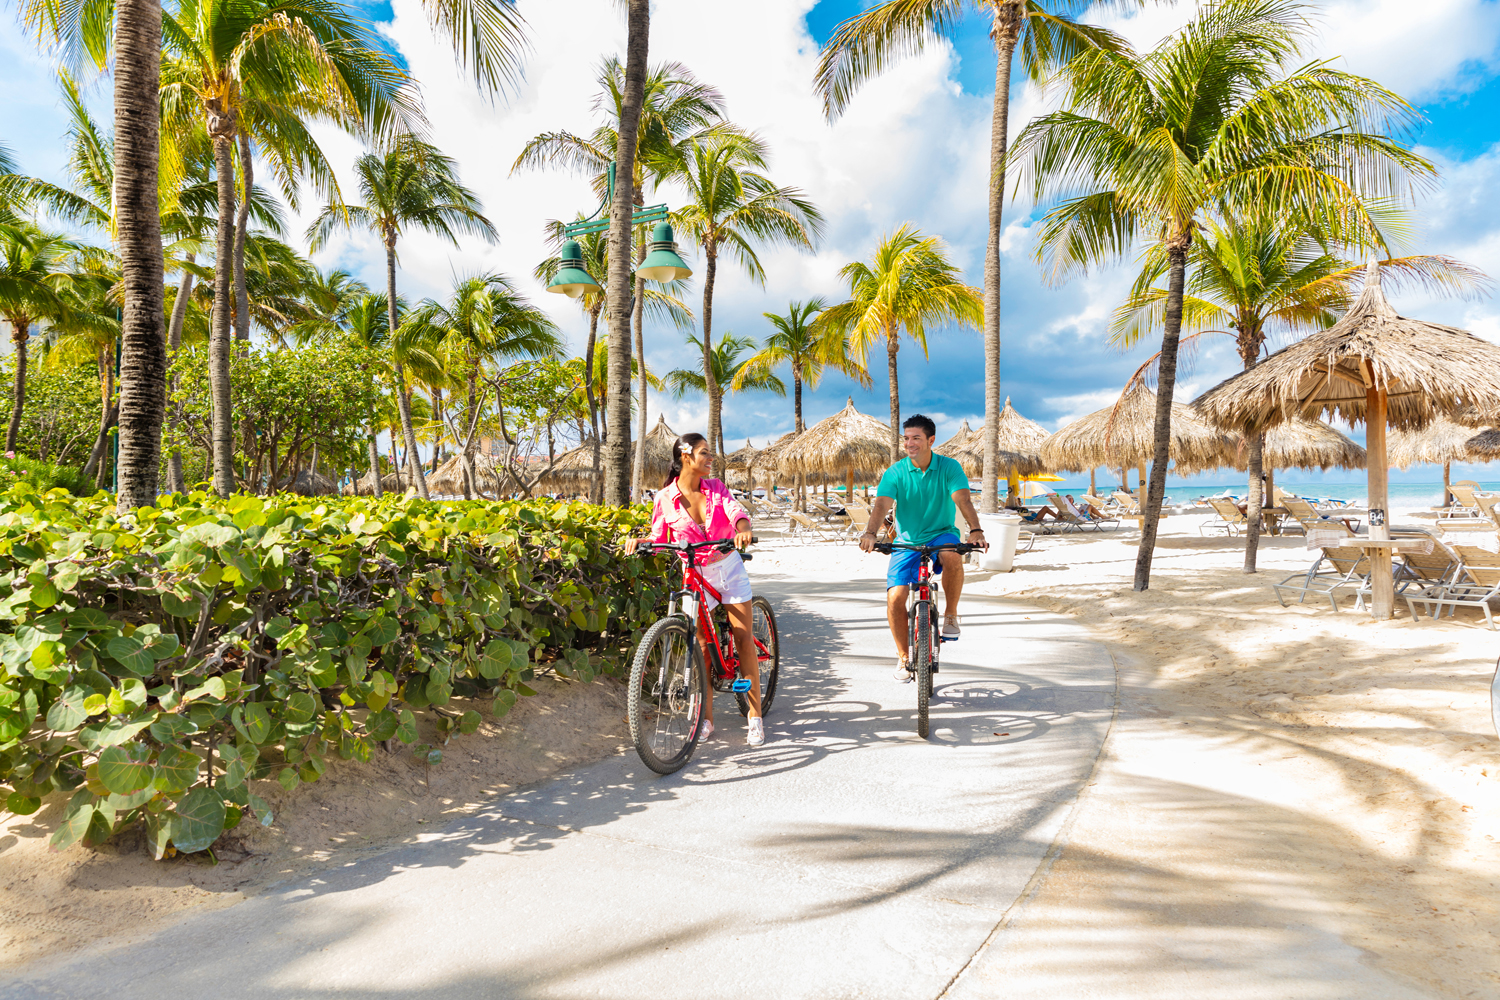 The Hilton Aruba offers complimentary bike rentals and tours.